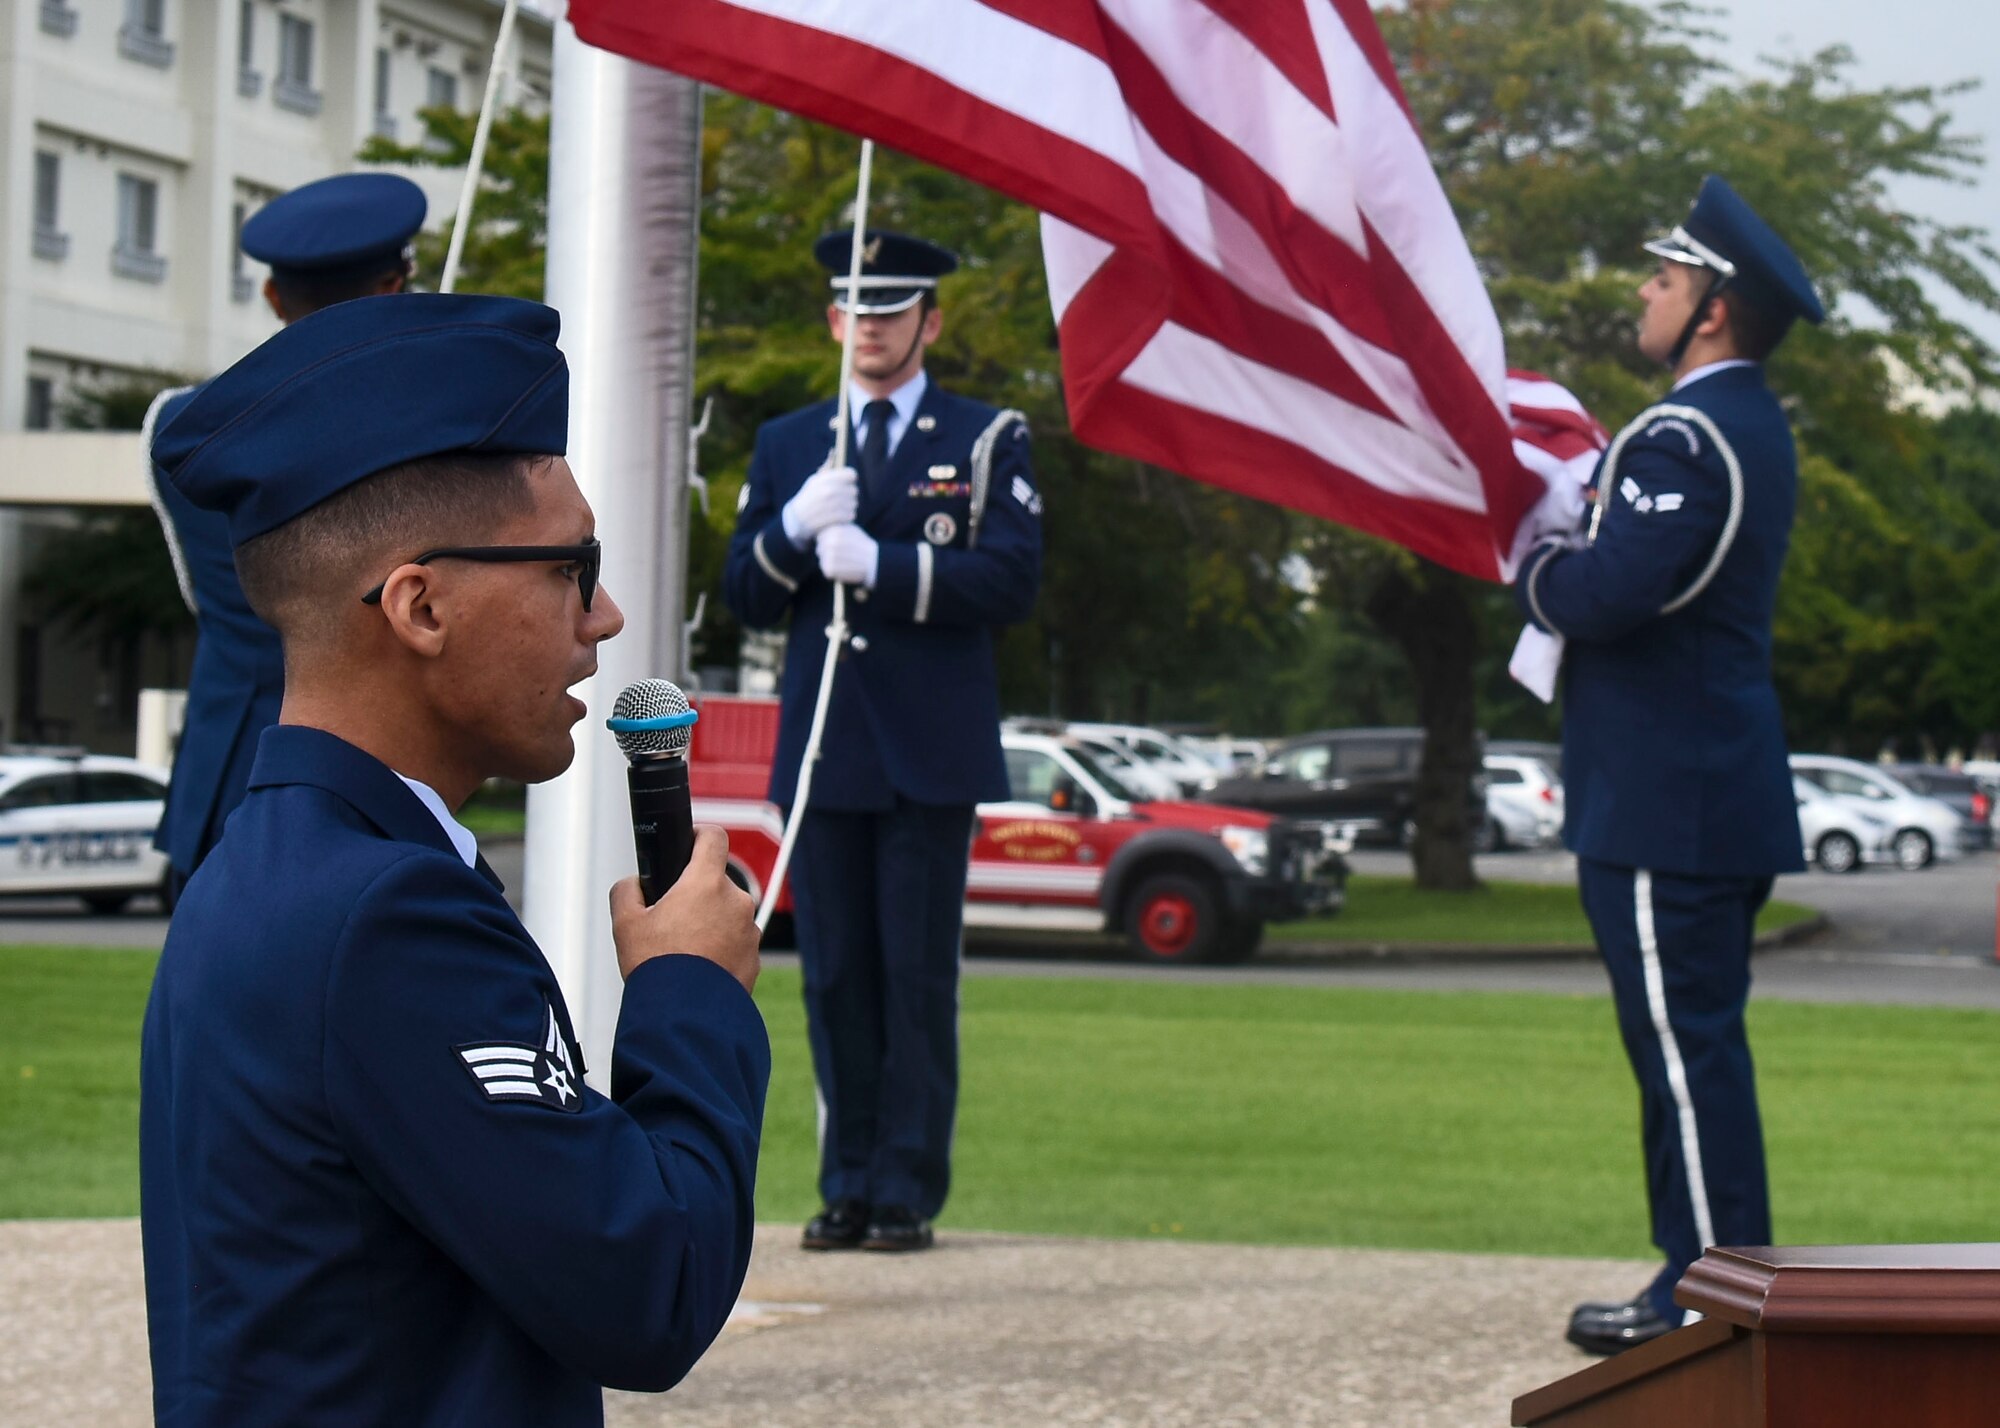 A service member sing the U.S. national anthem while honor guardsmen retrieve the U.S. flag.